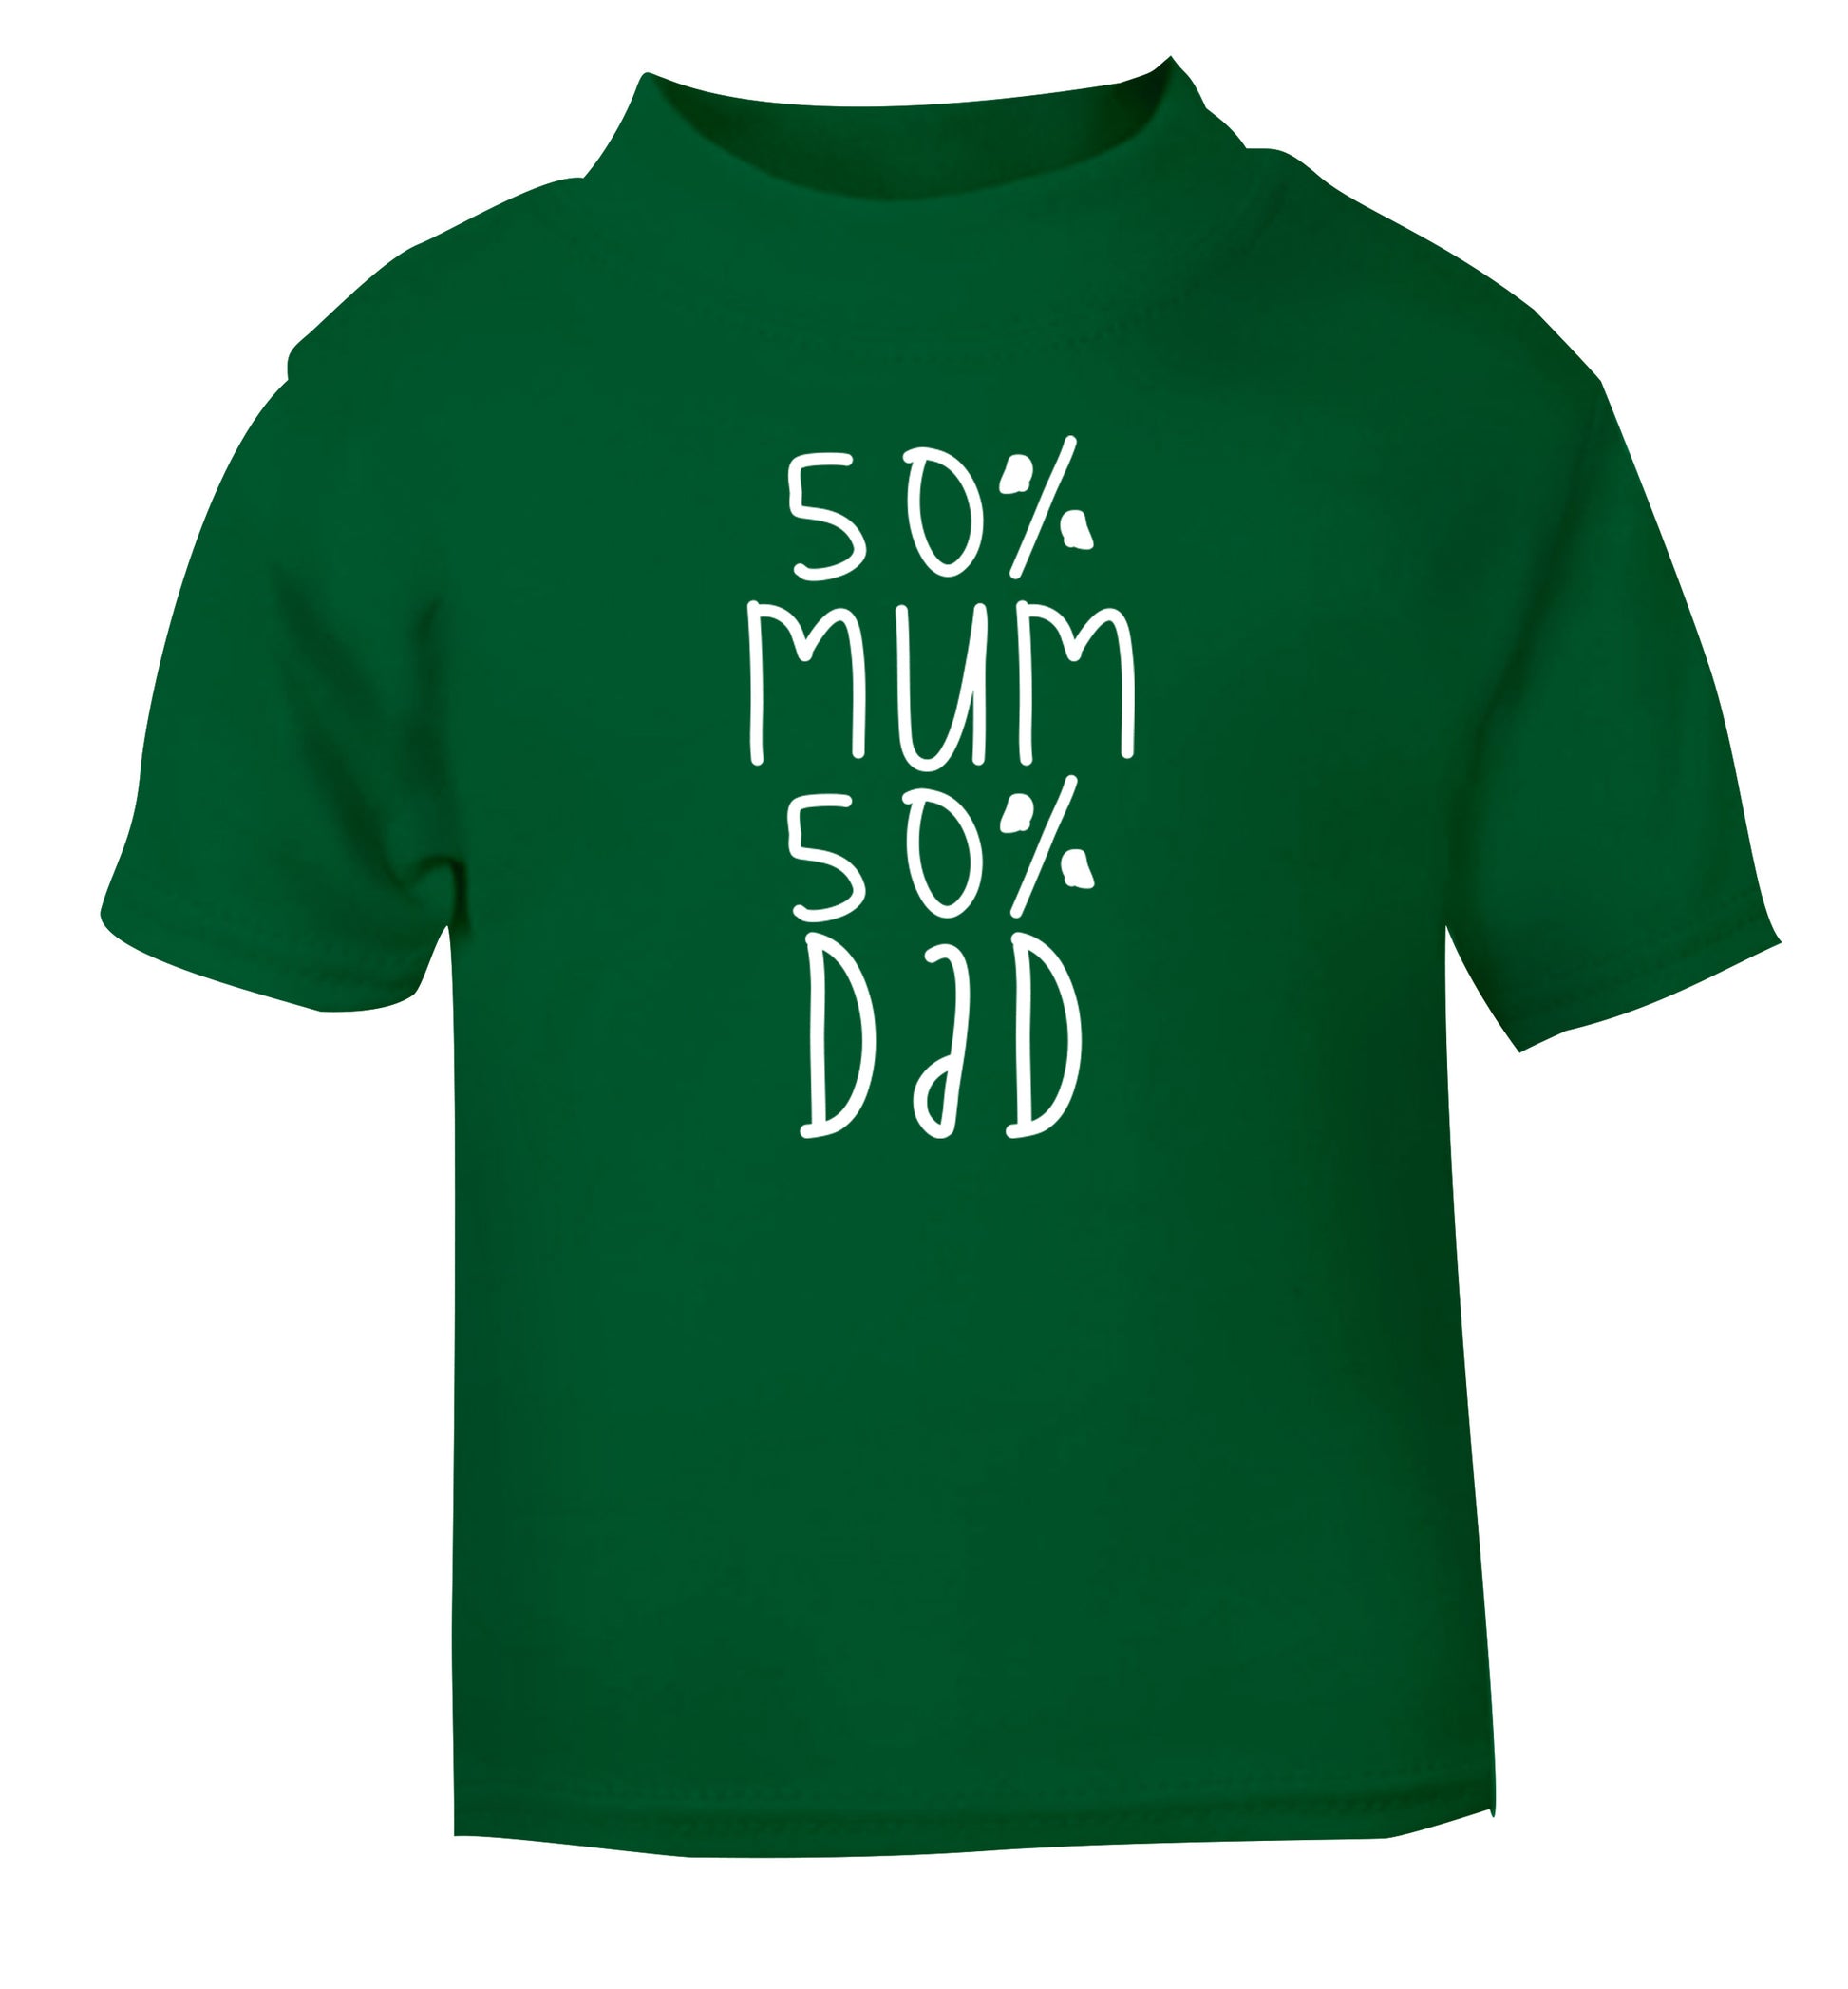 50% mum 50% dad green Baby Toddler Tshirt 2 Years